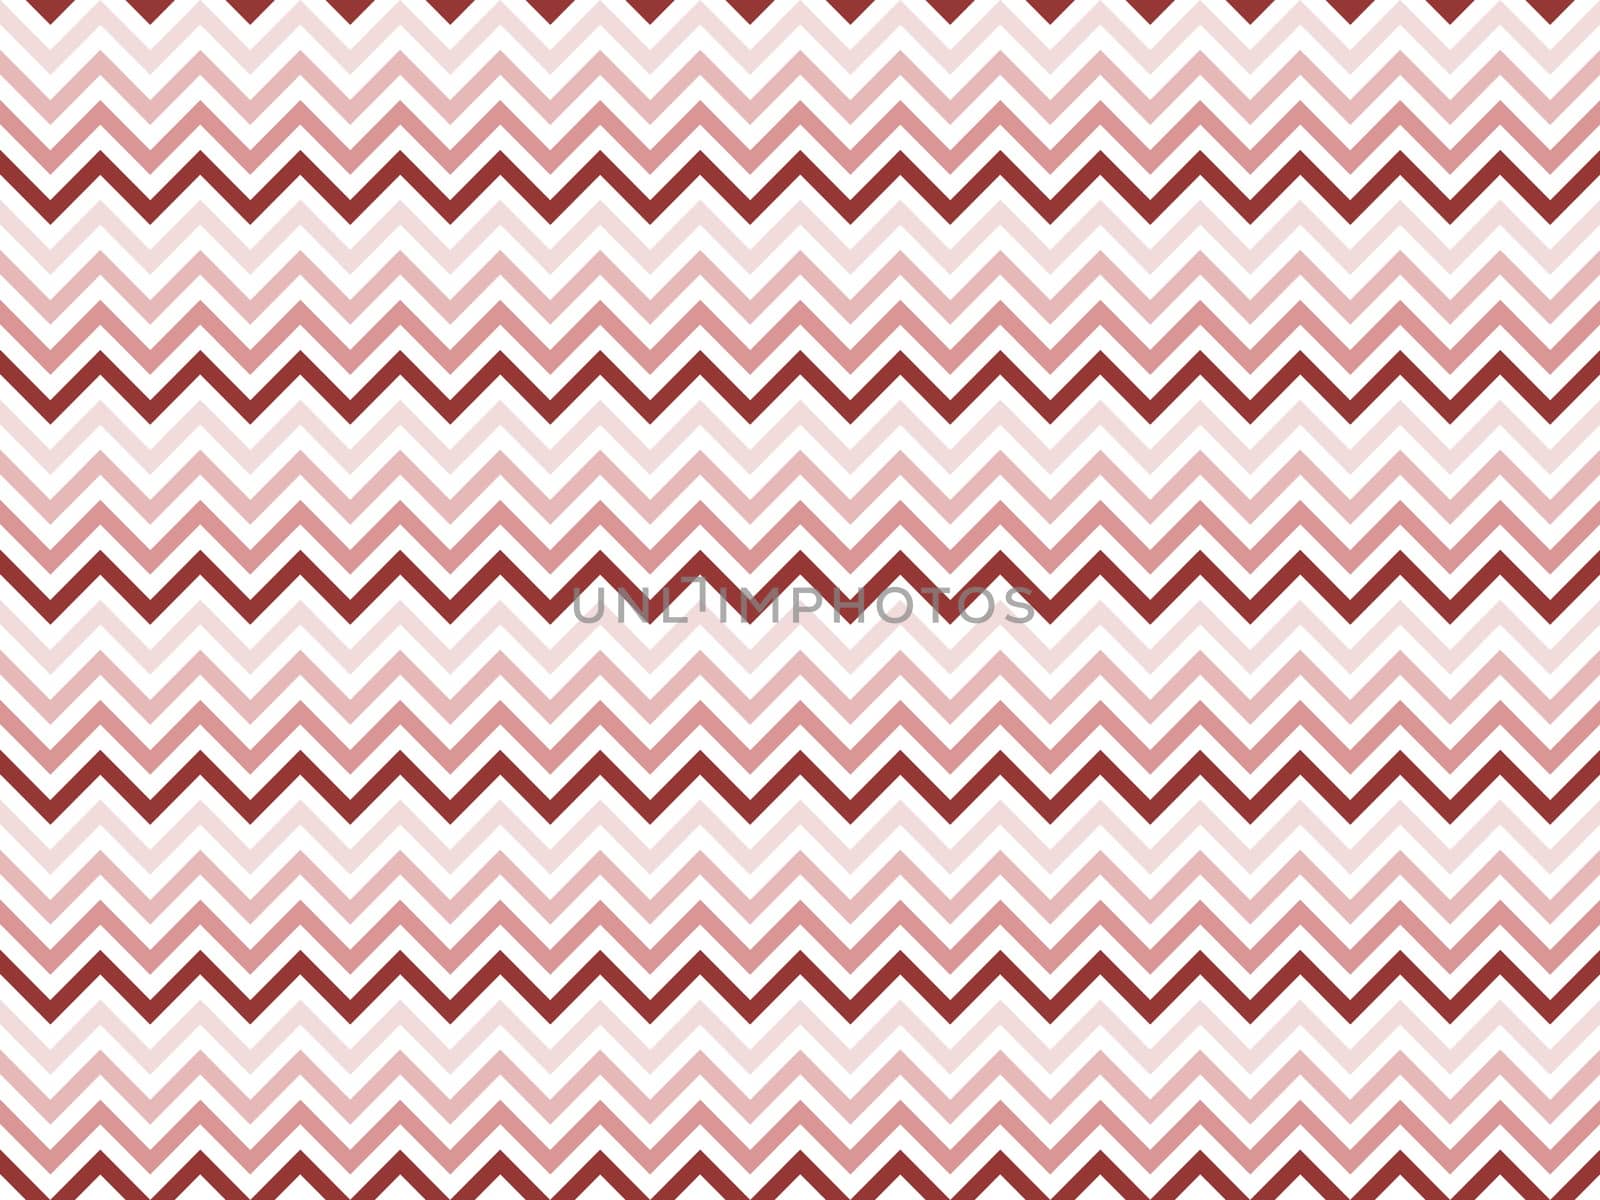 Zigzag pattern by Elenaphotos21